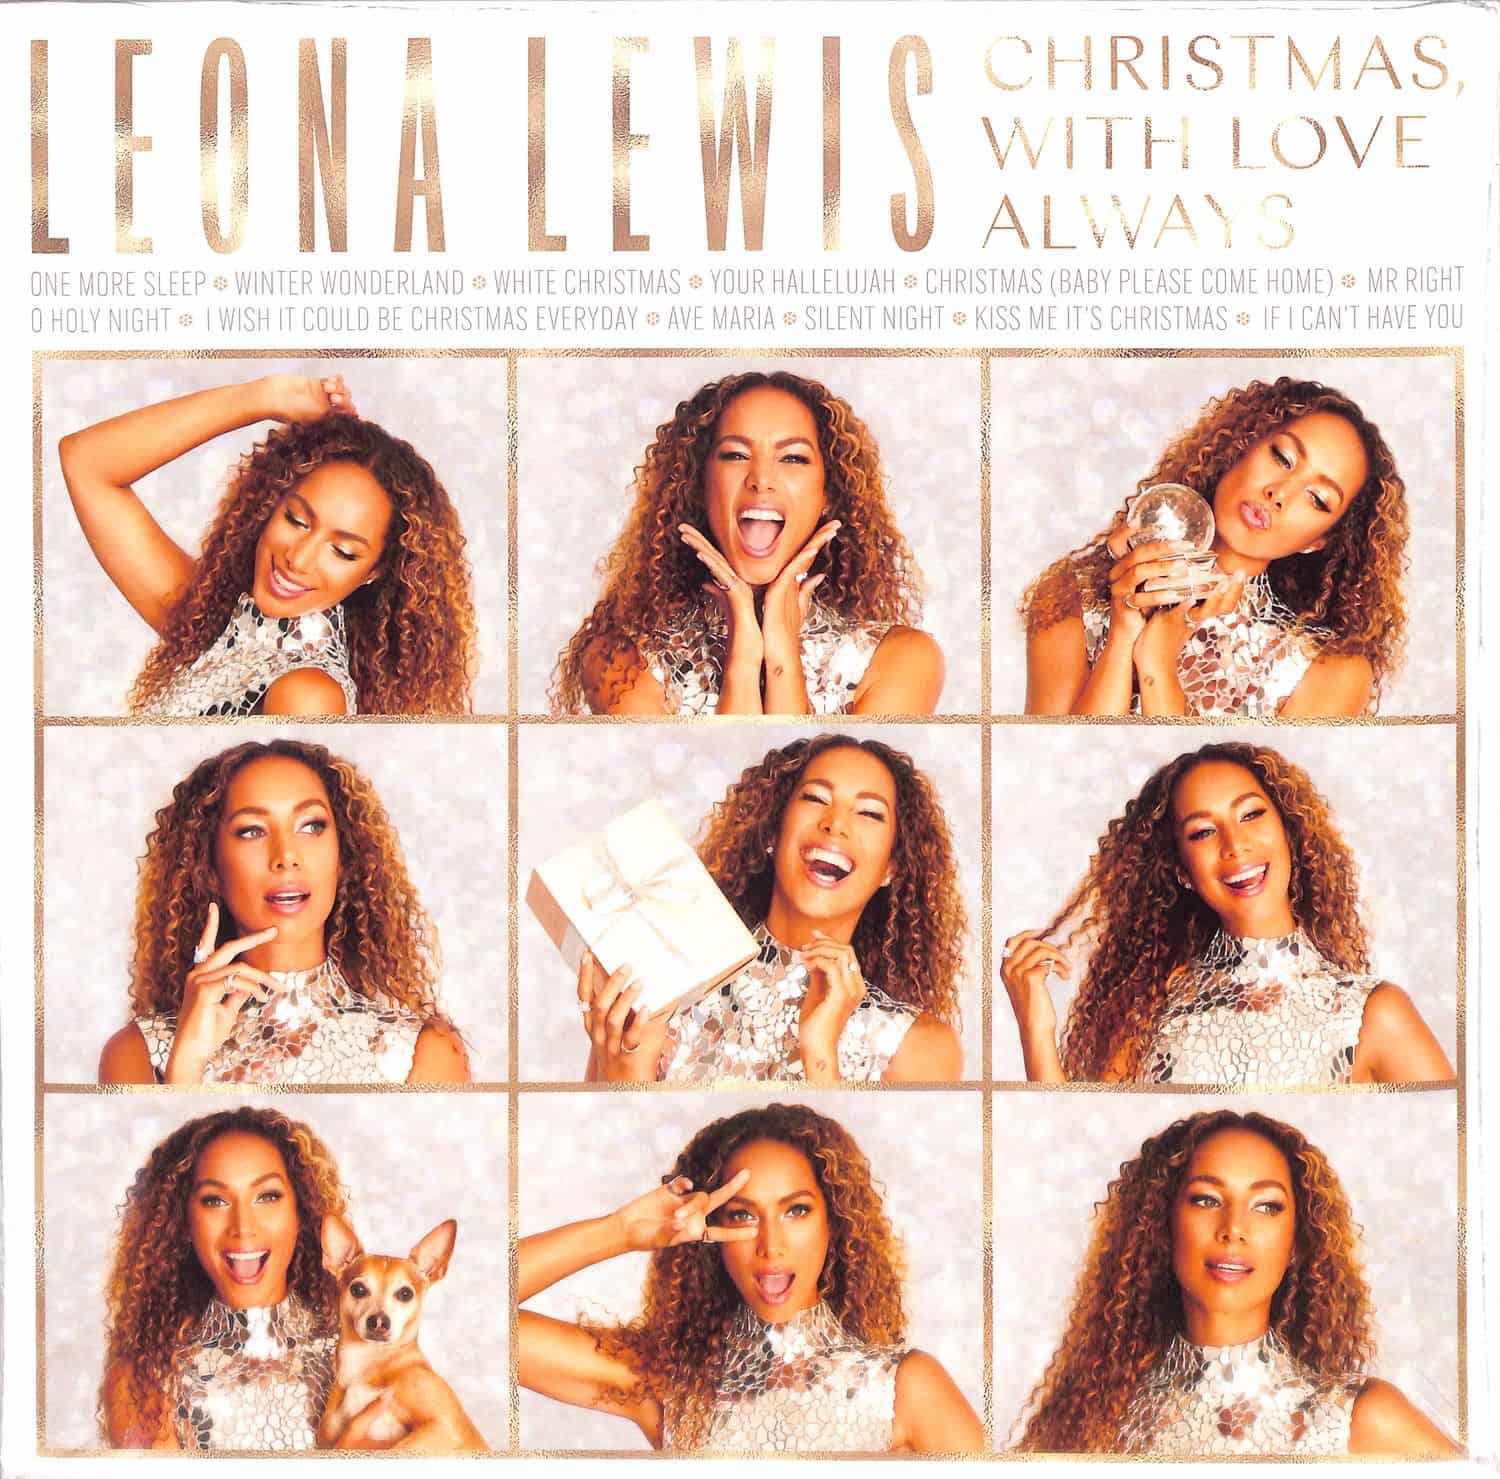 Leona Lewis - CHRISTMAS, WITH LOVE ALWAYS 